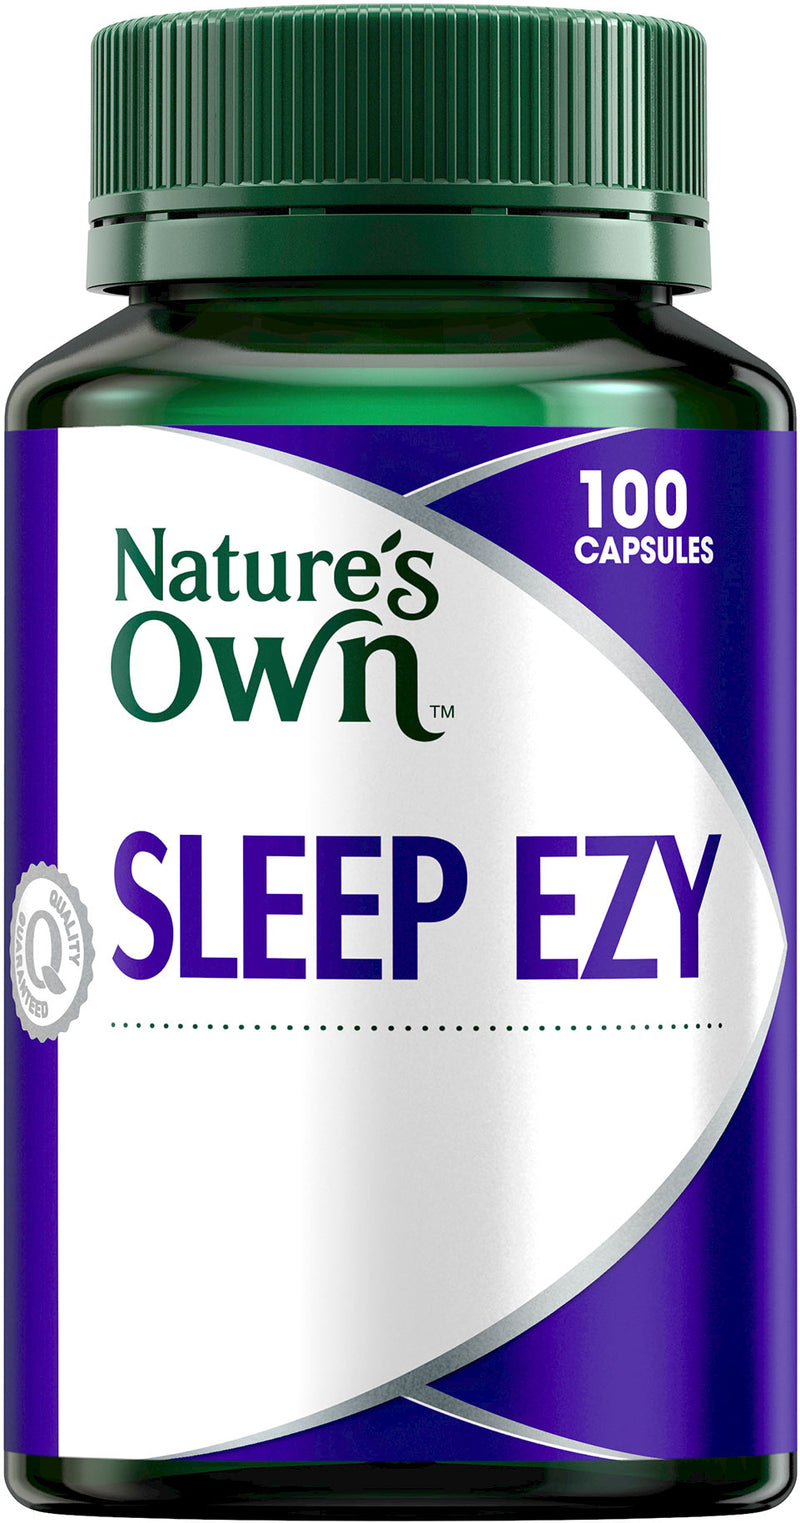 Natures Own Sleep Ezy